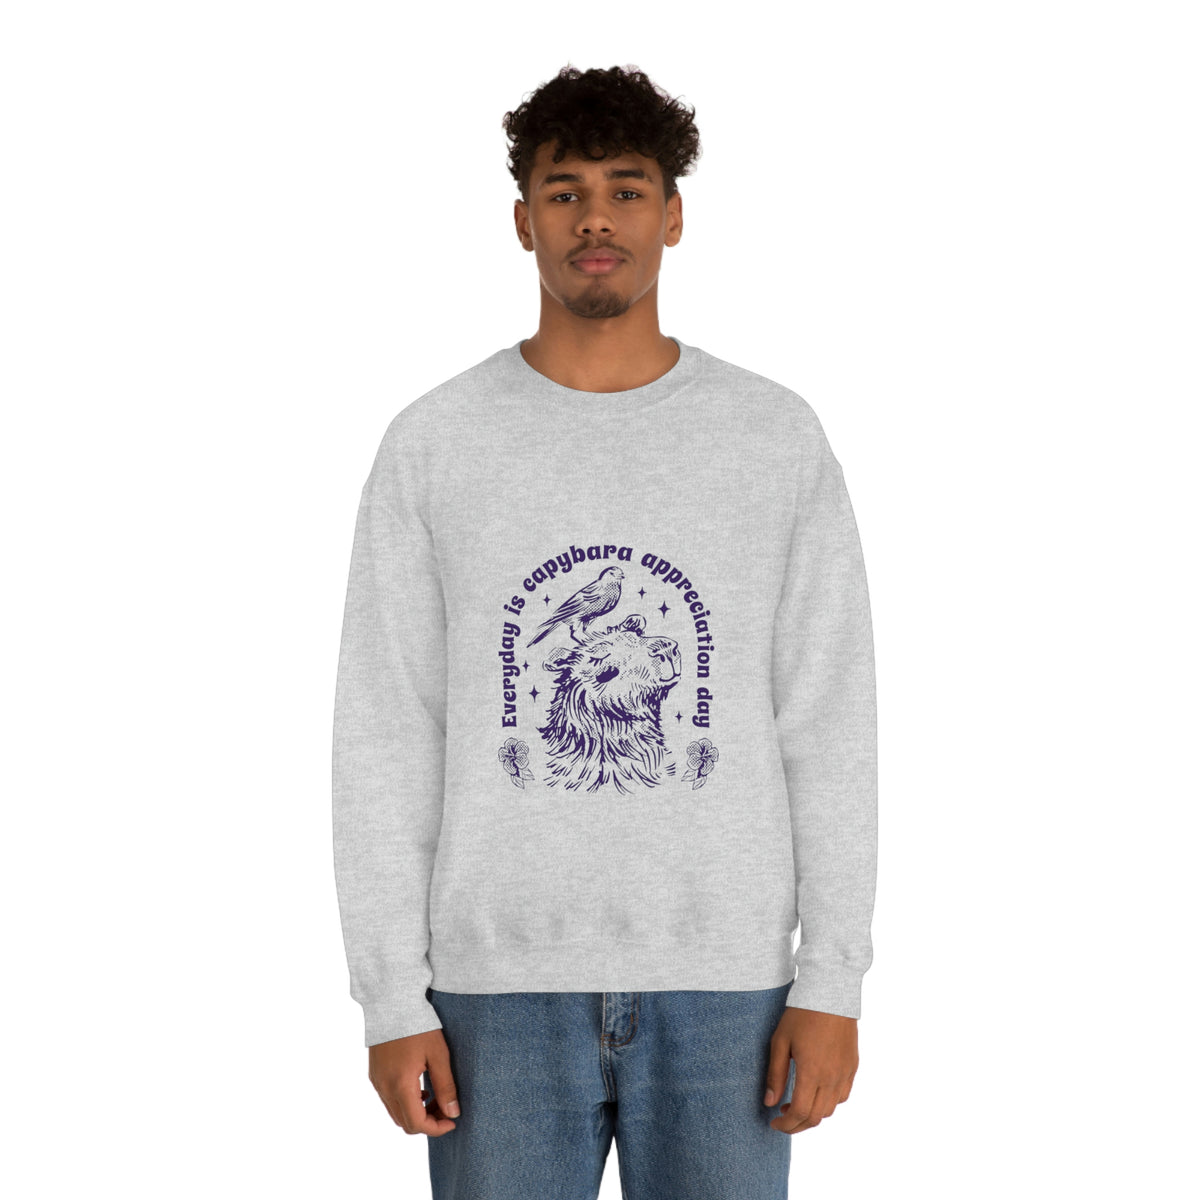 Capybara and Bird - Unisex Sweatshirt